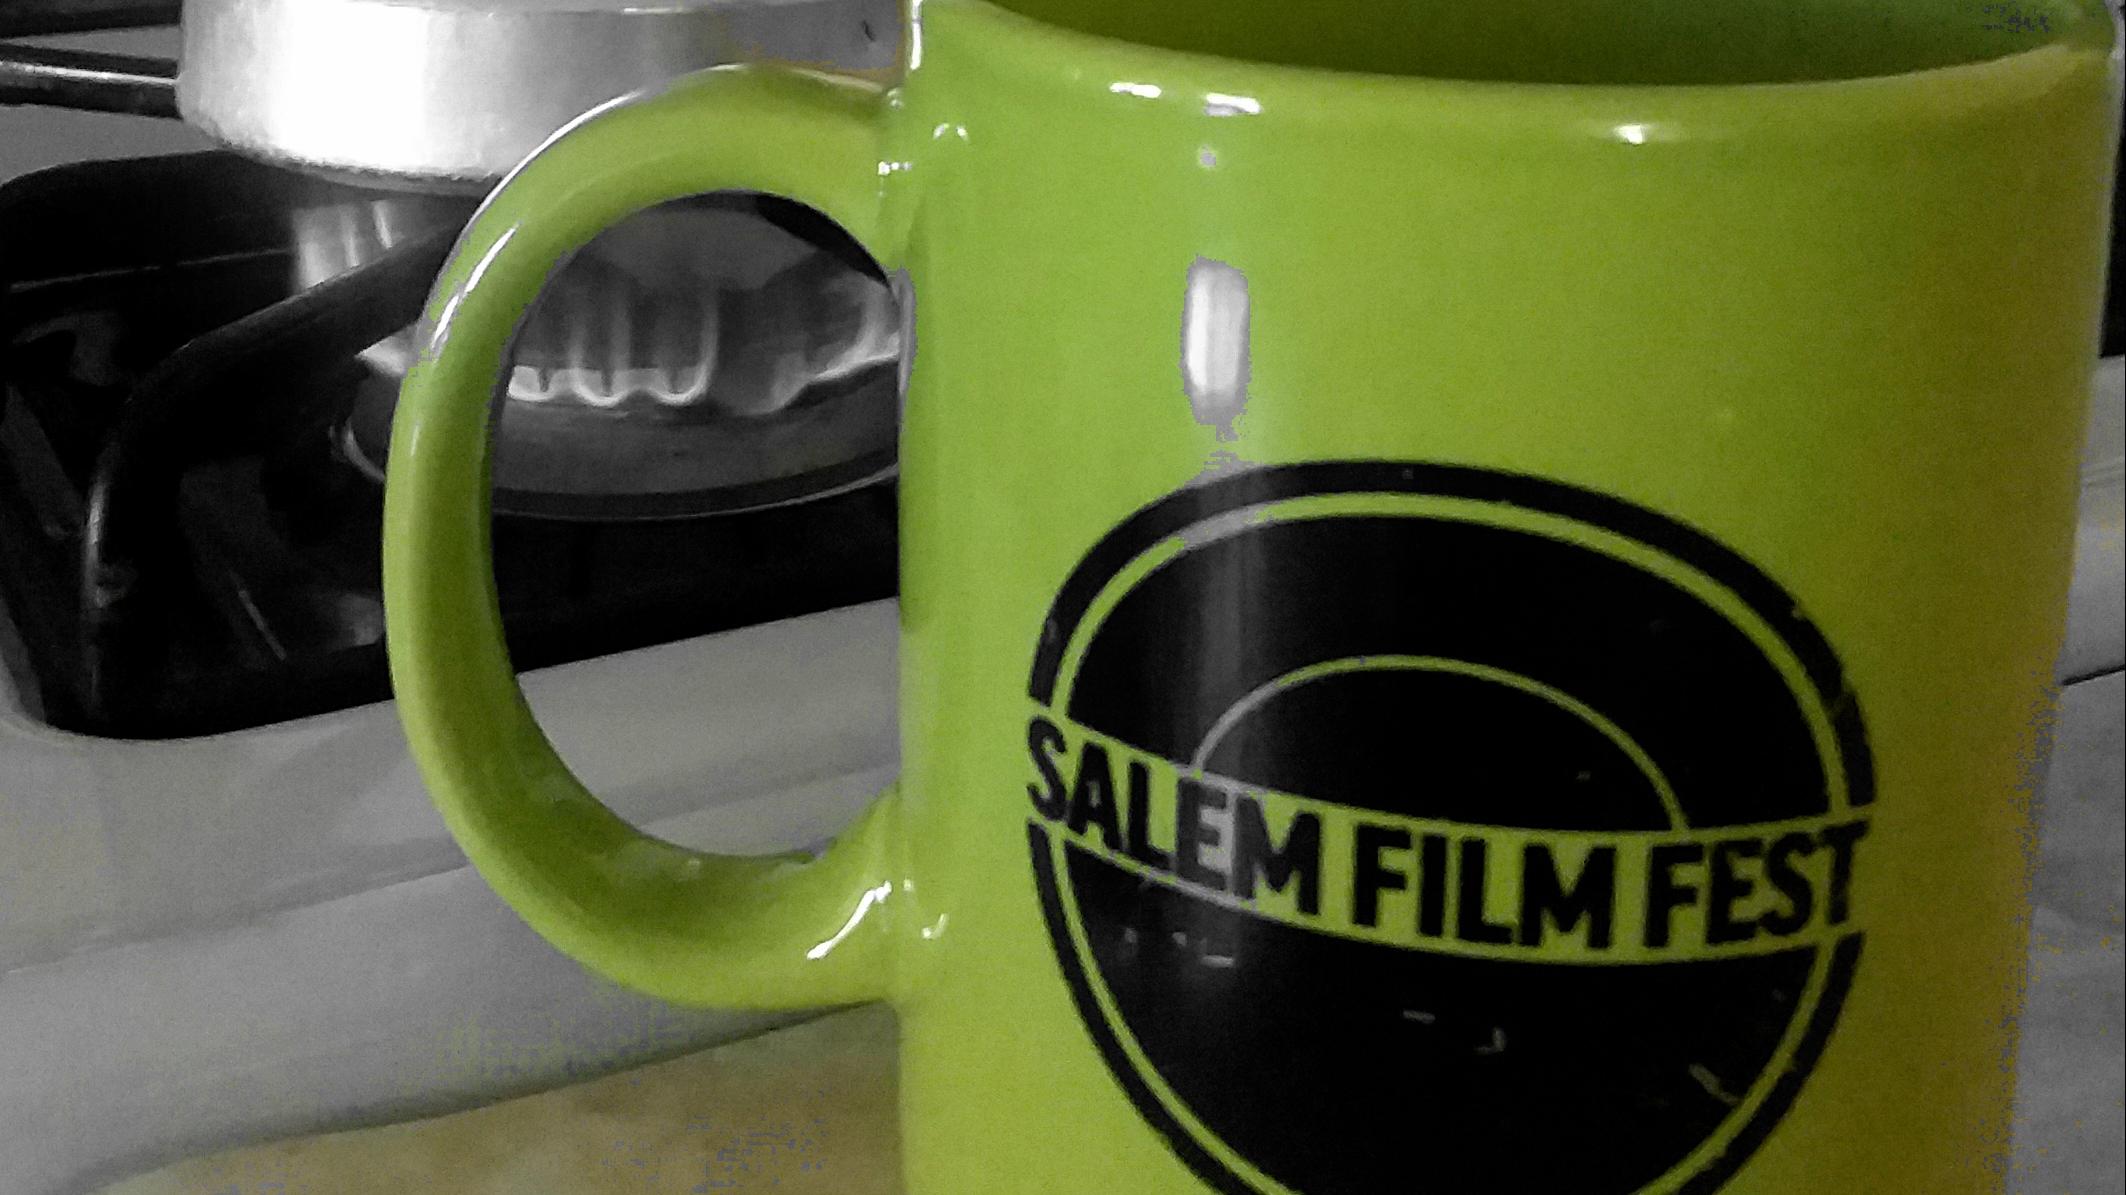 COFFEE TIME WITH SALEM FILM FEST